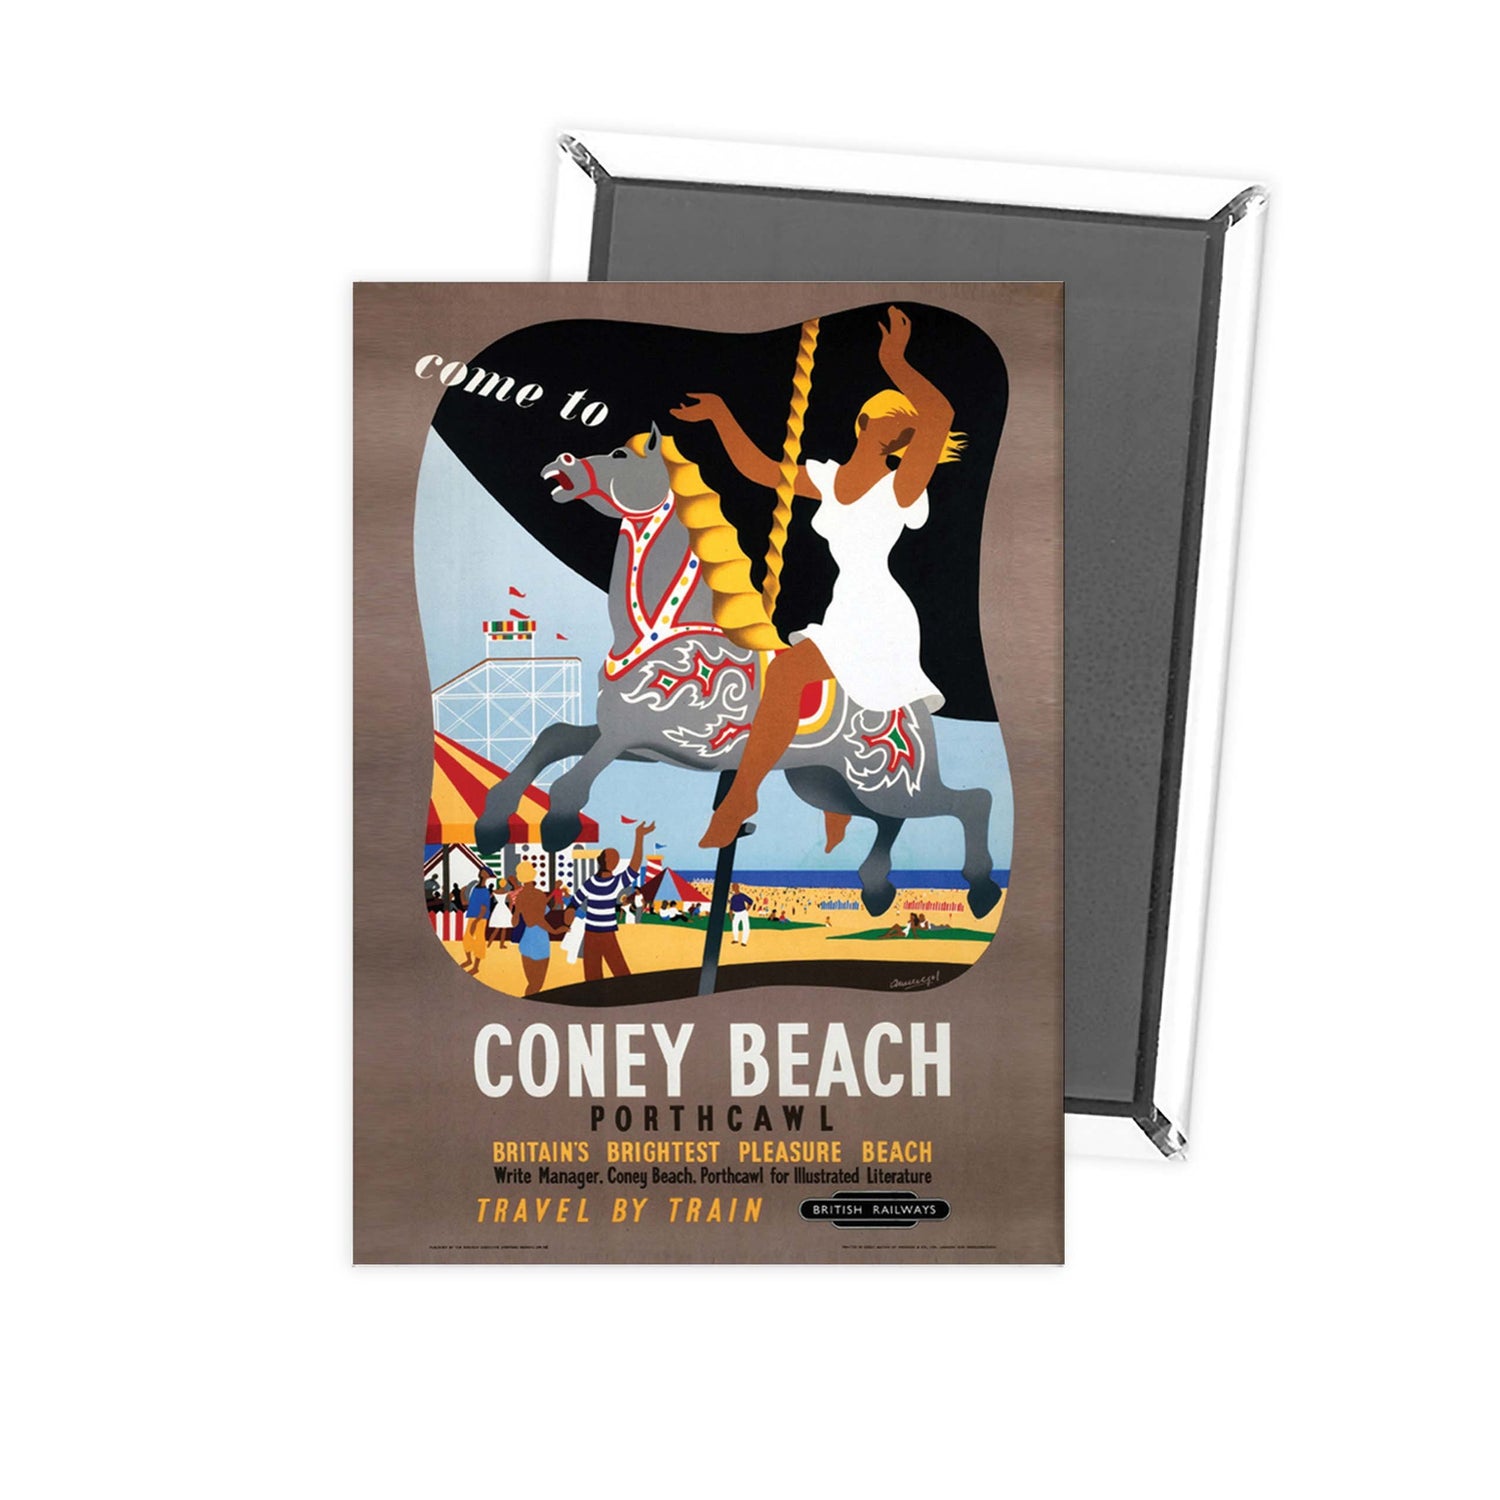 Coney Beach Porthcawl - Britain's Brightest Pleasure Beach - Carousel Fridge Magnet